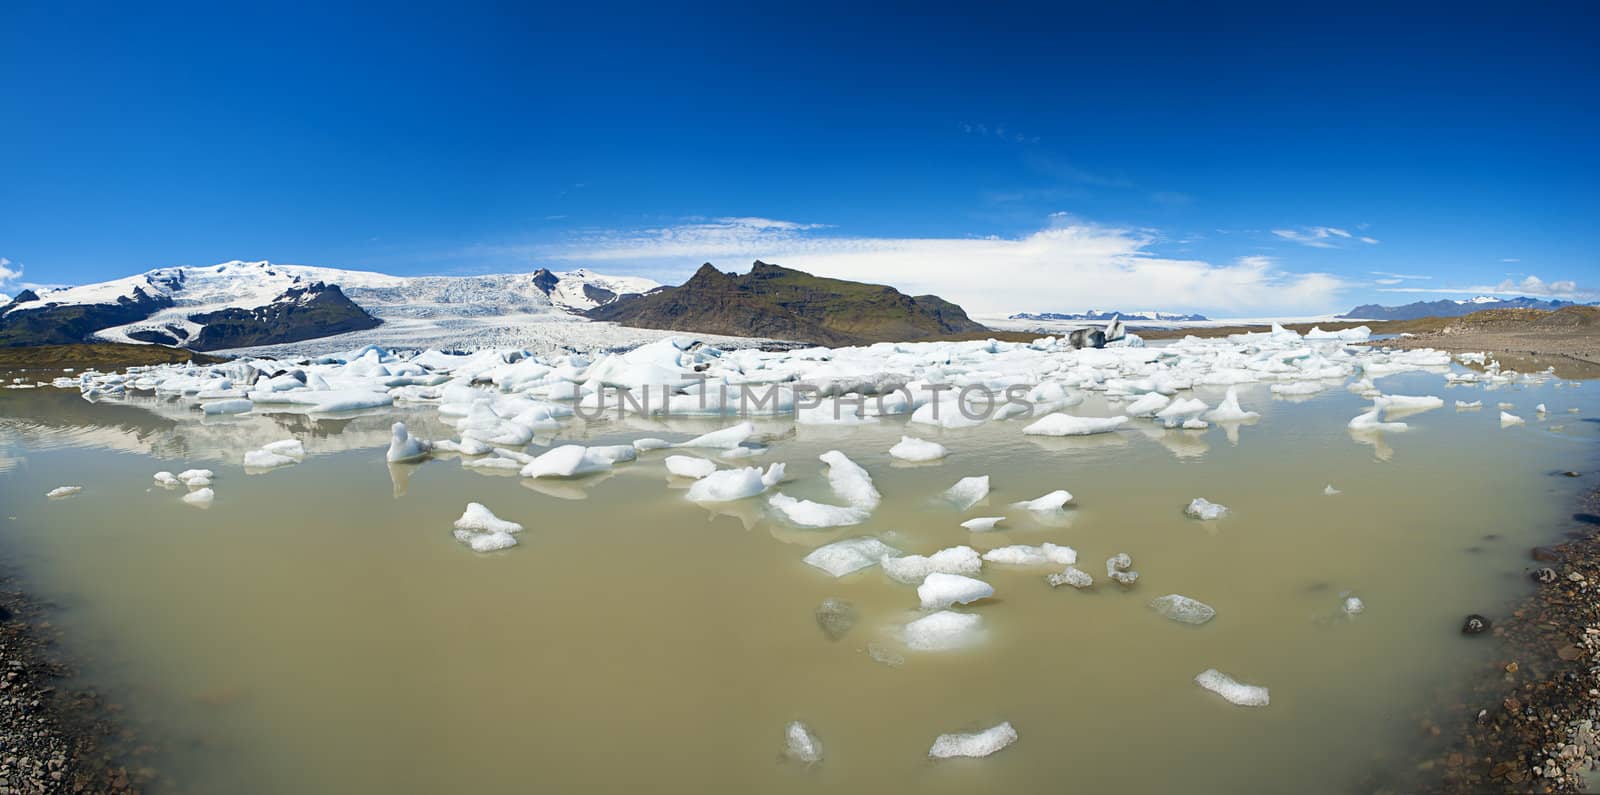 Beautiful panoramic photo of Fjallsarlon Glacial lake full of floating icebergs near the Fjallsjokull glacier